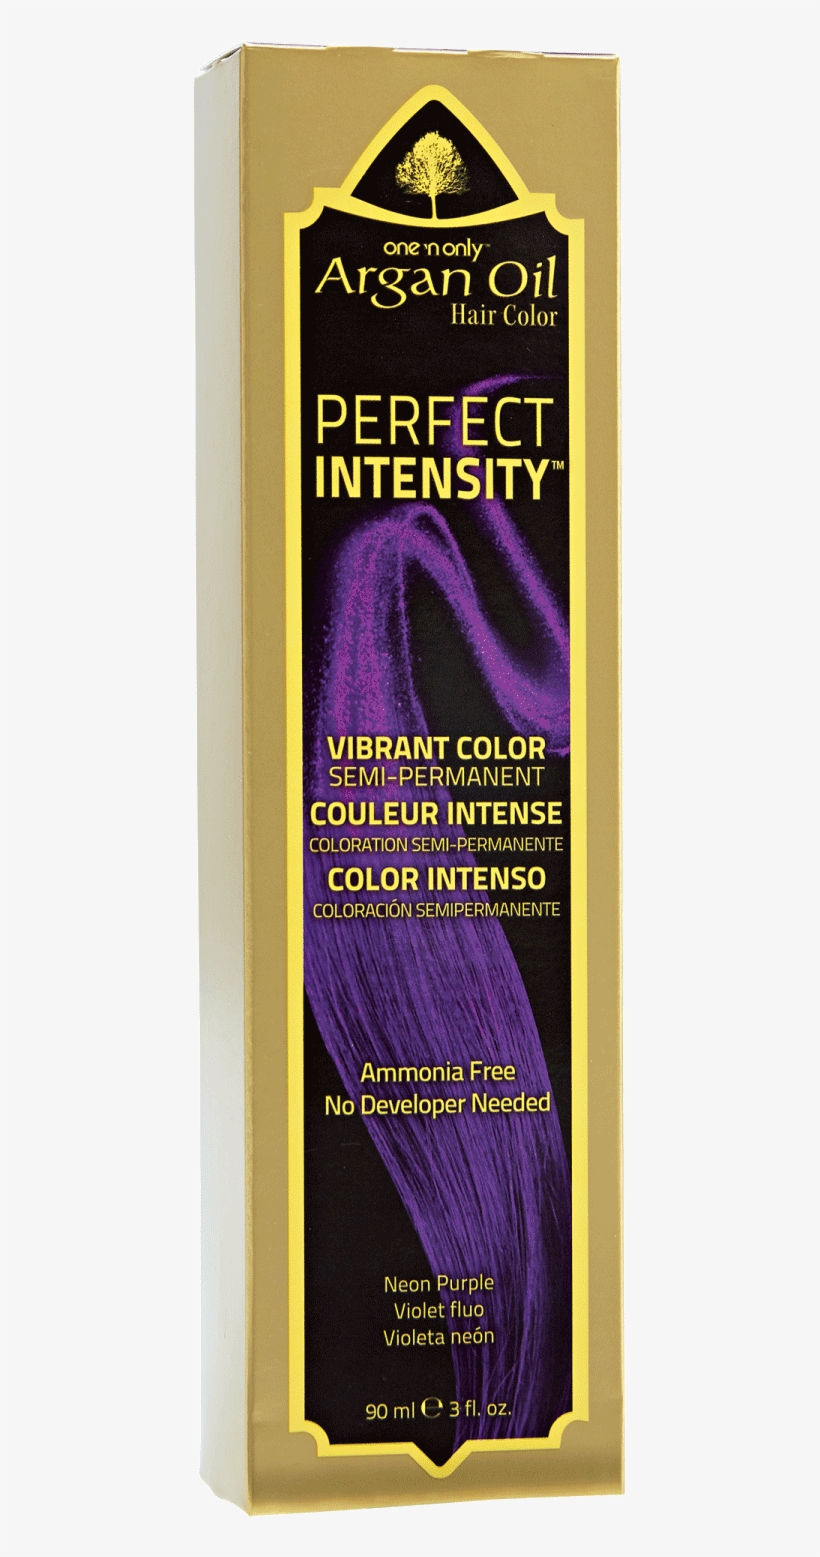 Argan Oil Hair Dye, transparent png #7817343